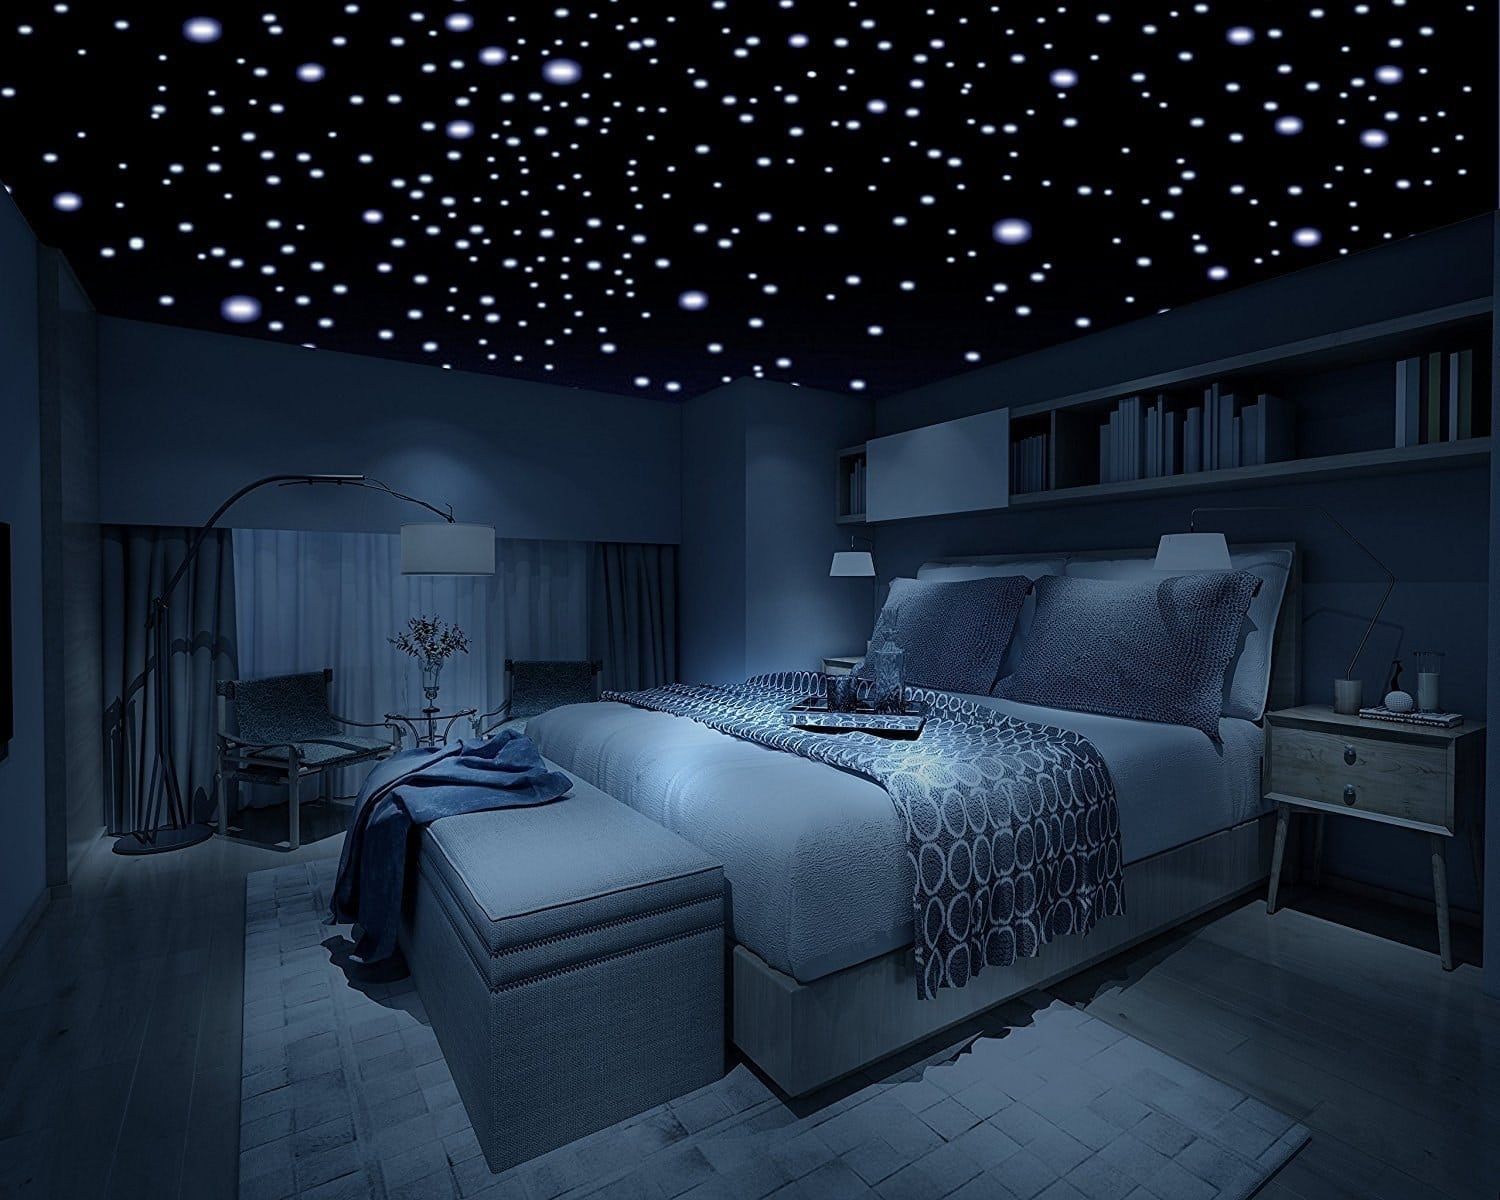 Bedroom Lighting Ideas: 23 Clever Ways To Light Your Room